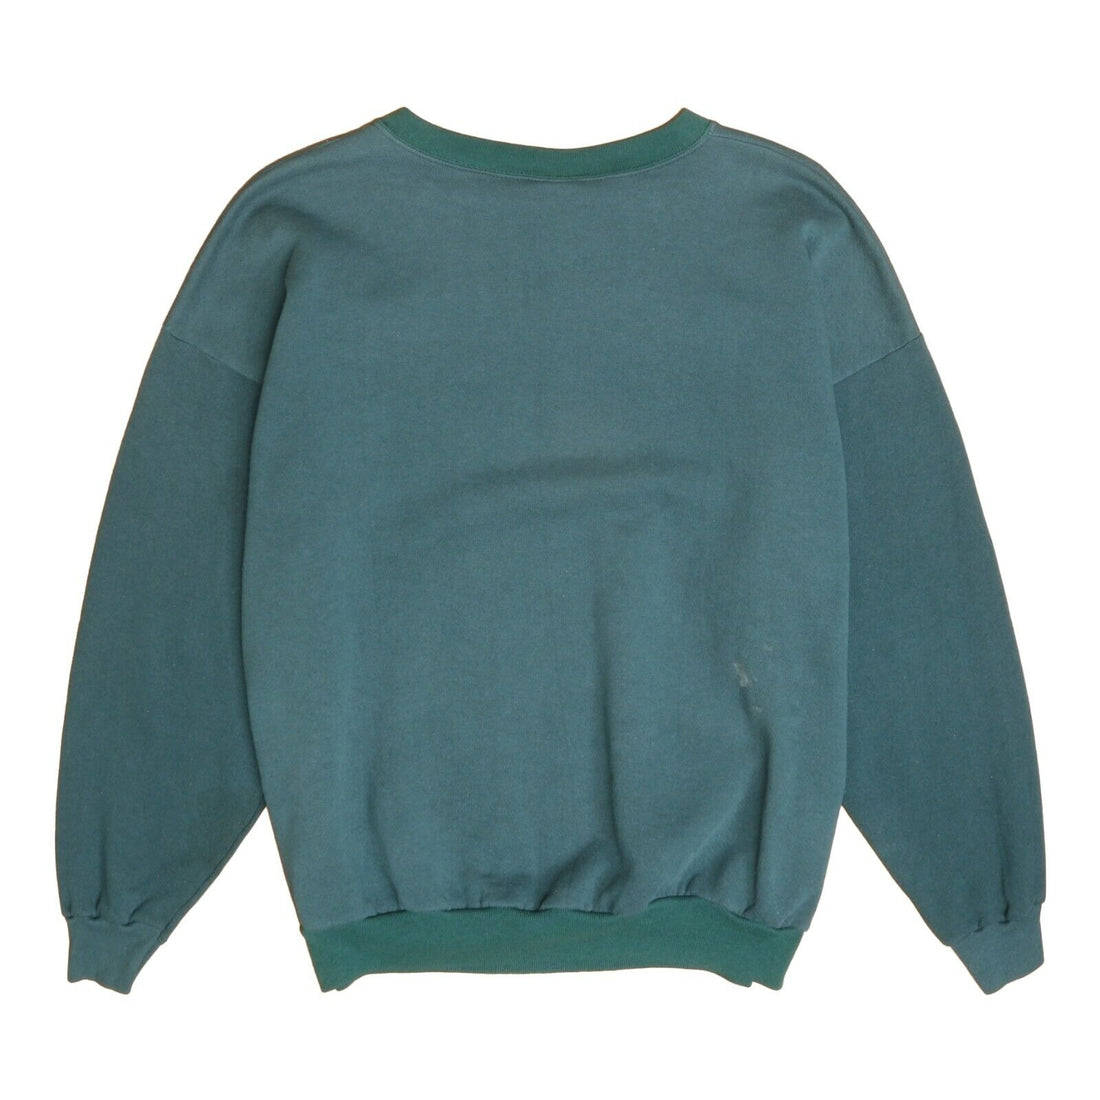 Vintage Mickey Mouse American Classic Sweatshirt Crewneck Size XL Green 90s